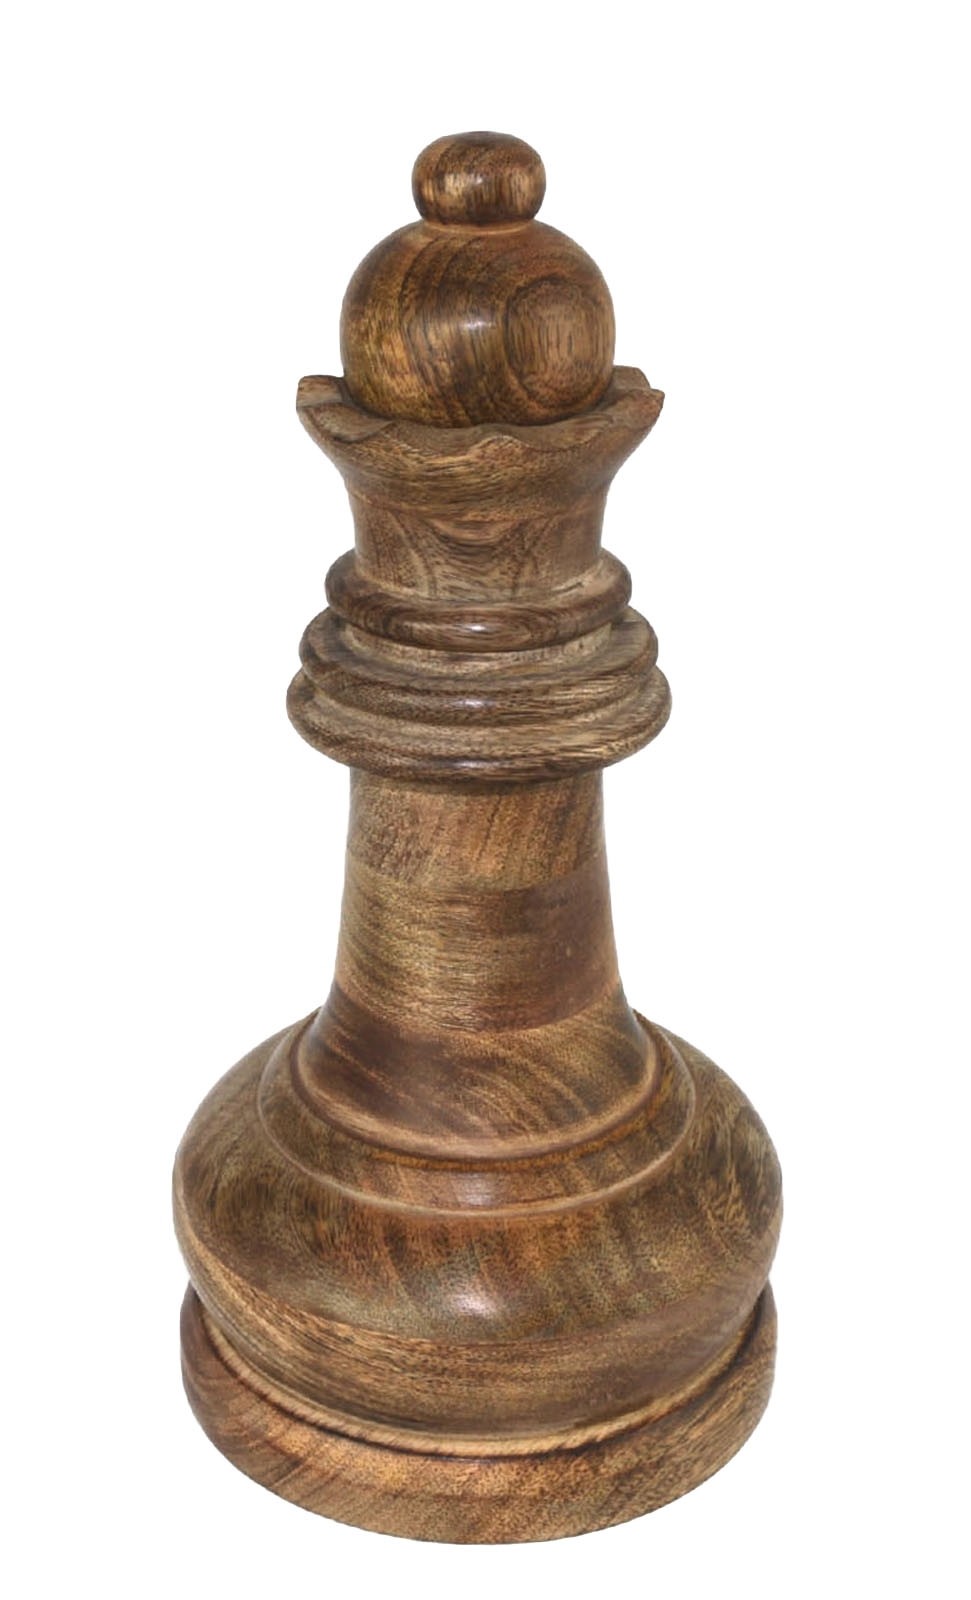 Mango Wood Queen Chess Piece 36cm